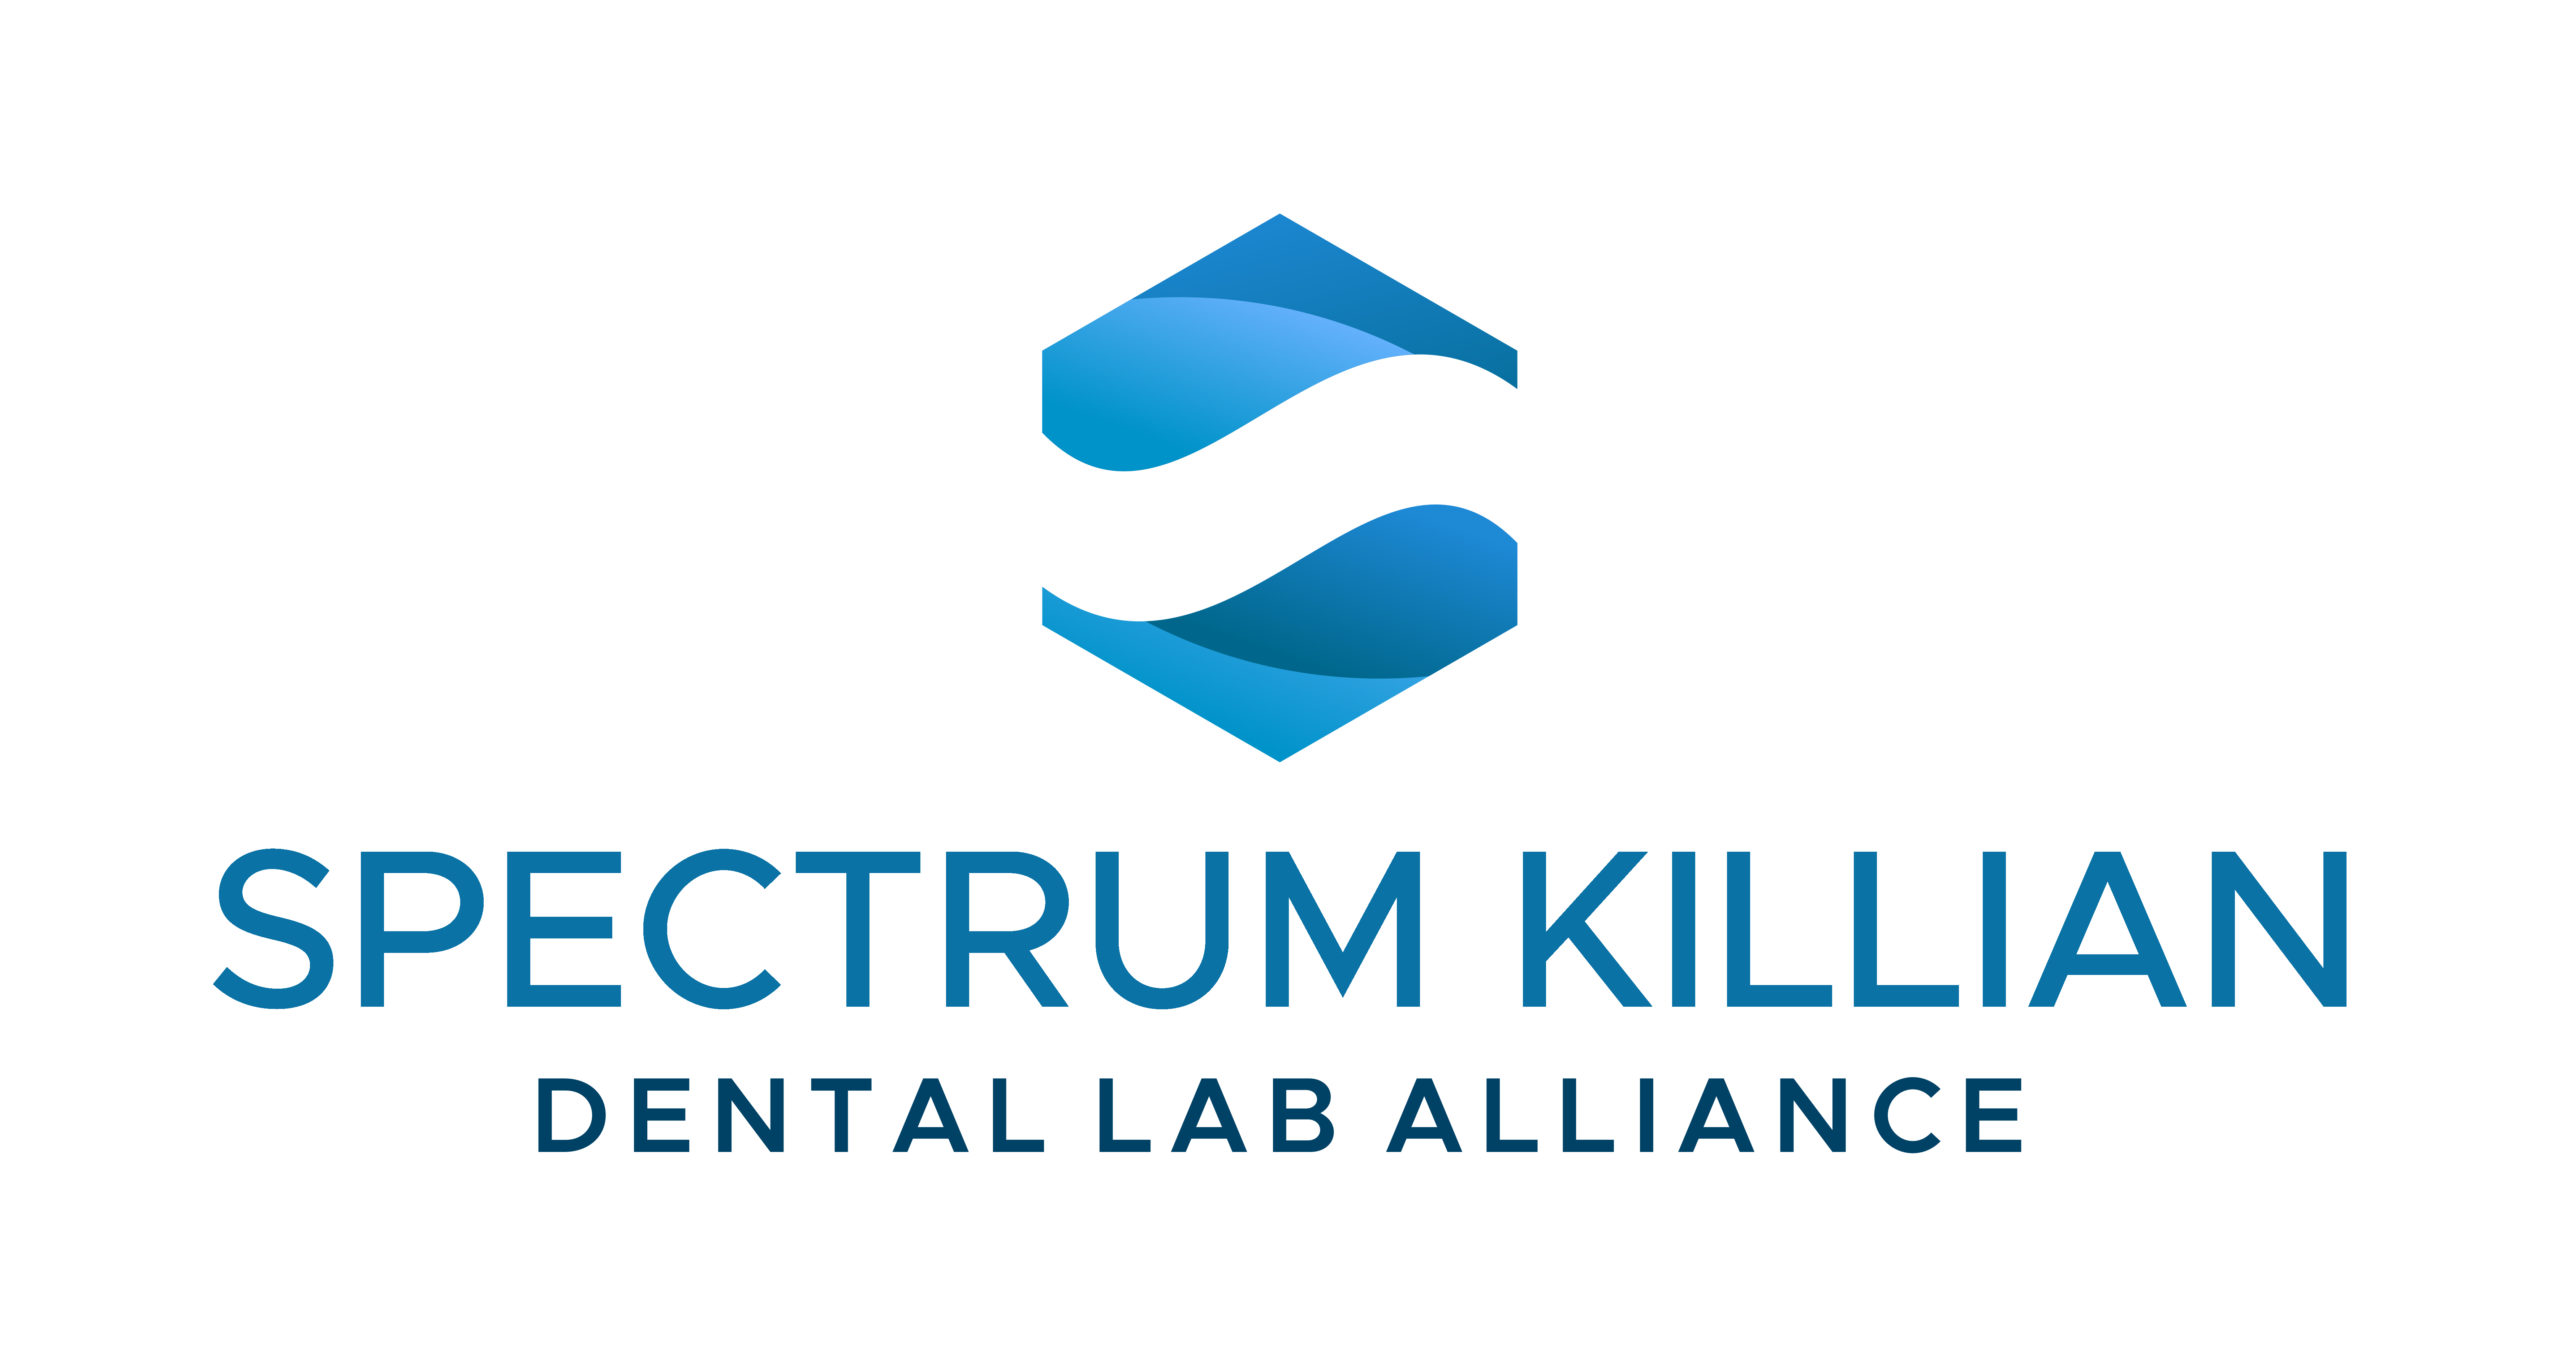 Spectrum Killian Dental Lab Alliance Logo